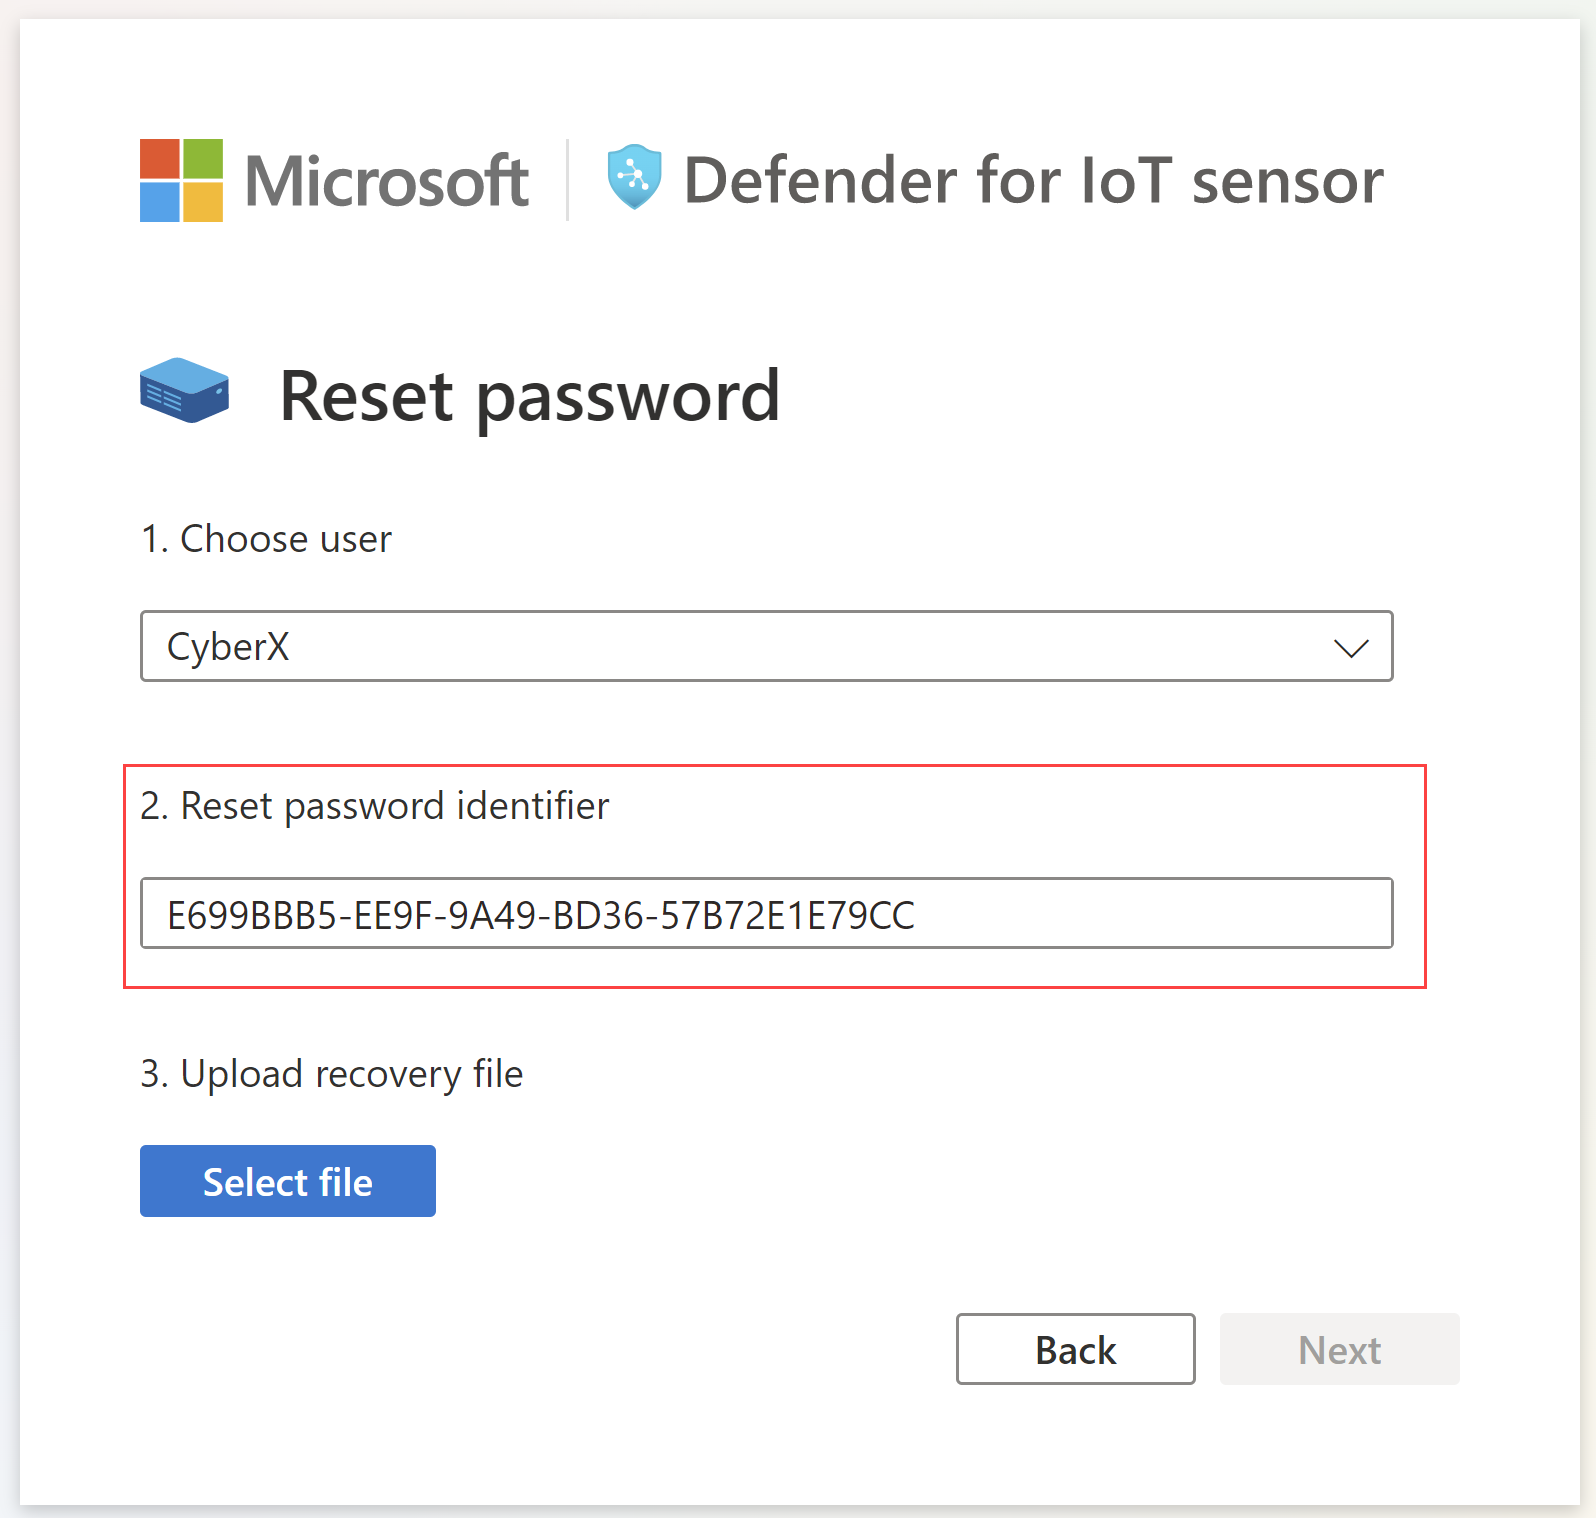 Screenshot of the Reset password dialog on the OT sensor.